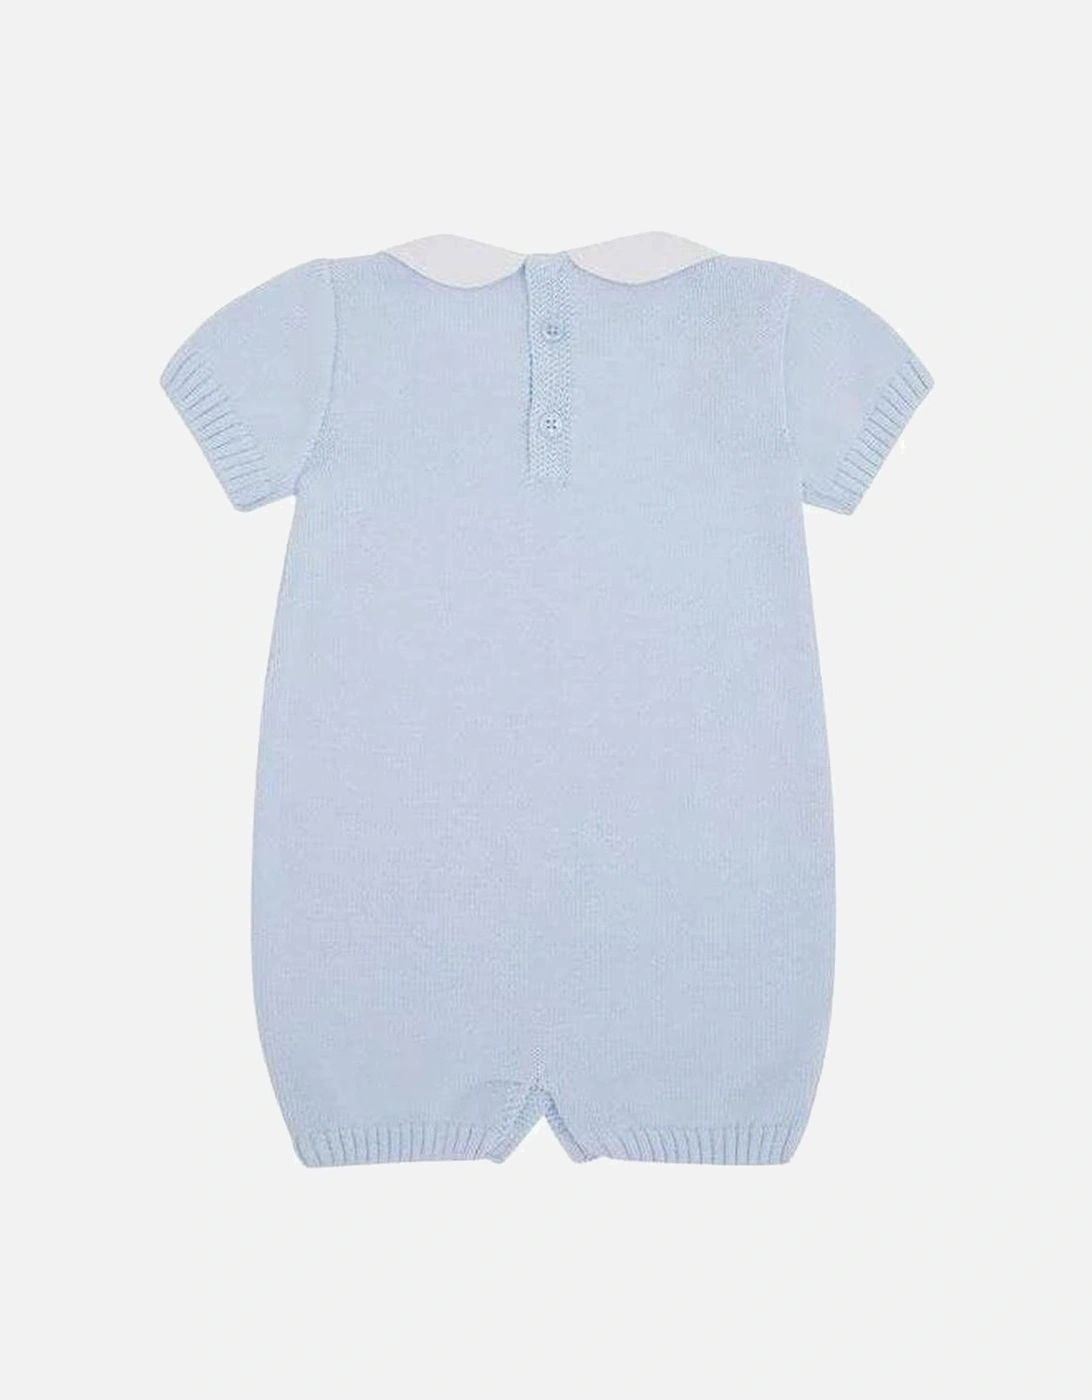 Baby Boys 'Oceano' Knitted Shortie